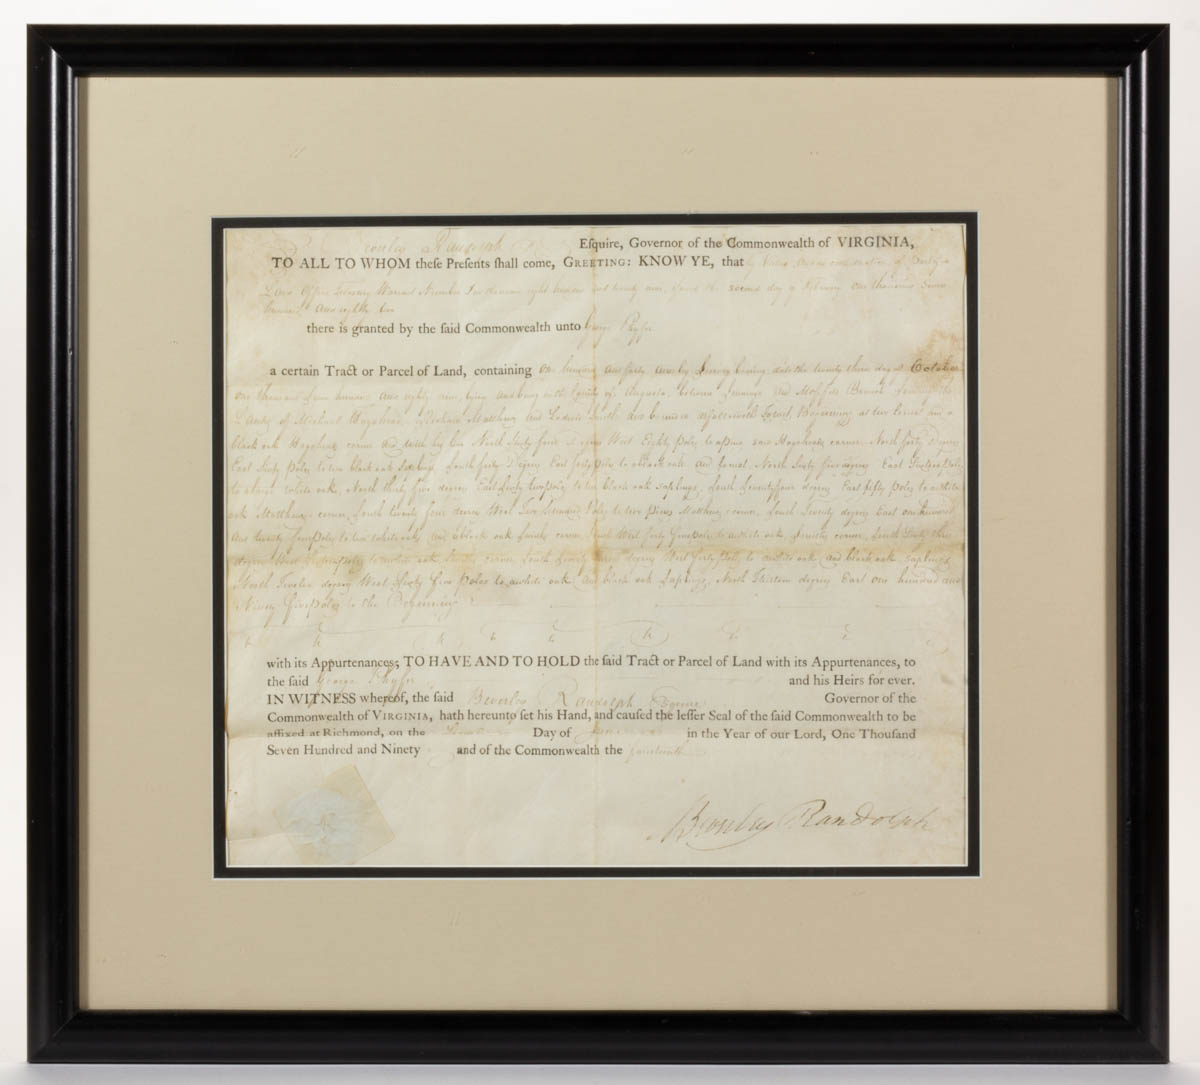 BEVERLEY RANDOLPH (1754-1794) SIGNED 1790 VIRGINIA LAND GRANT DOCUMENT